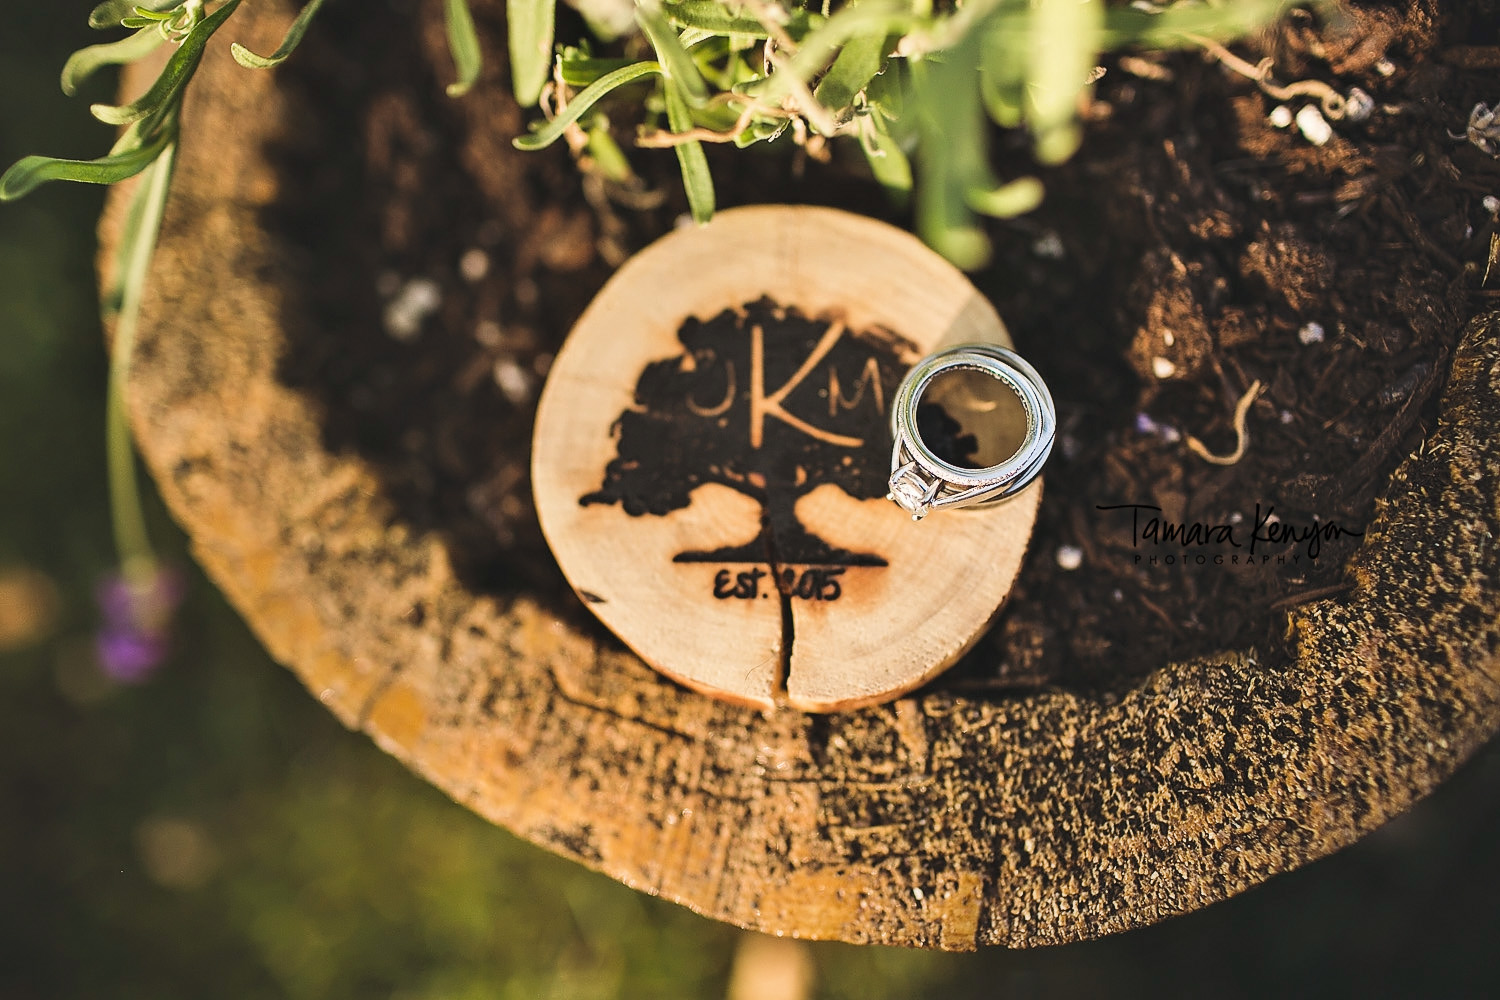 wedding rings on wooden logs wedding details